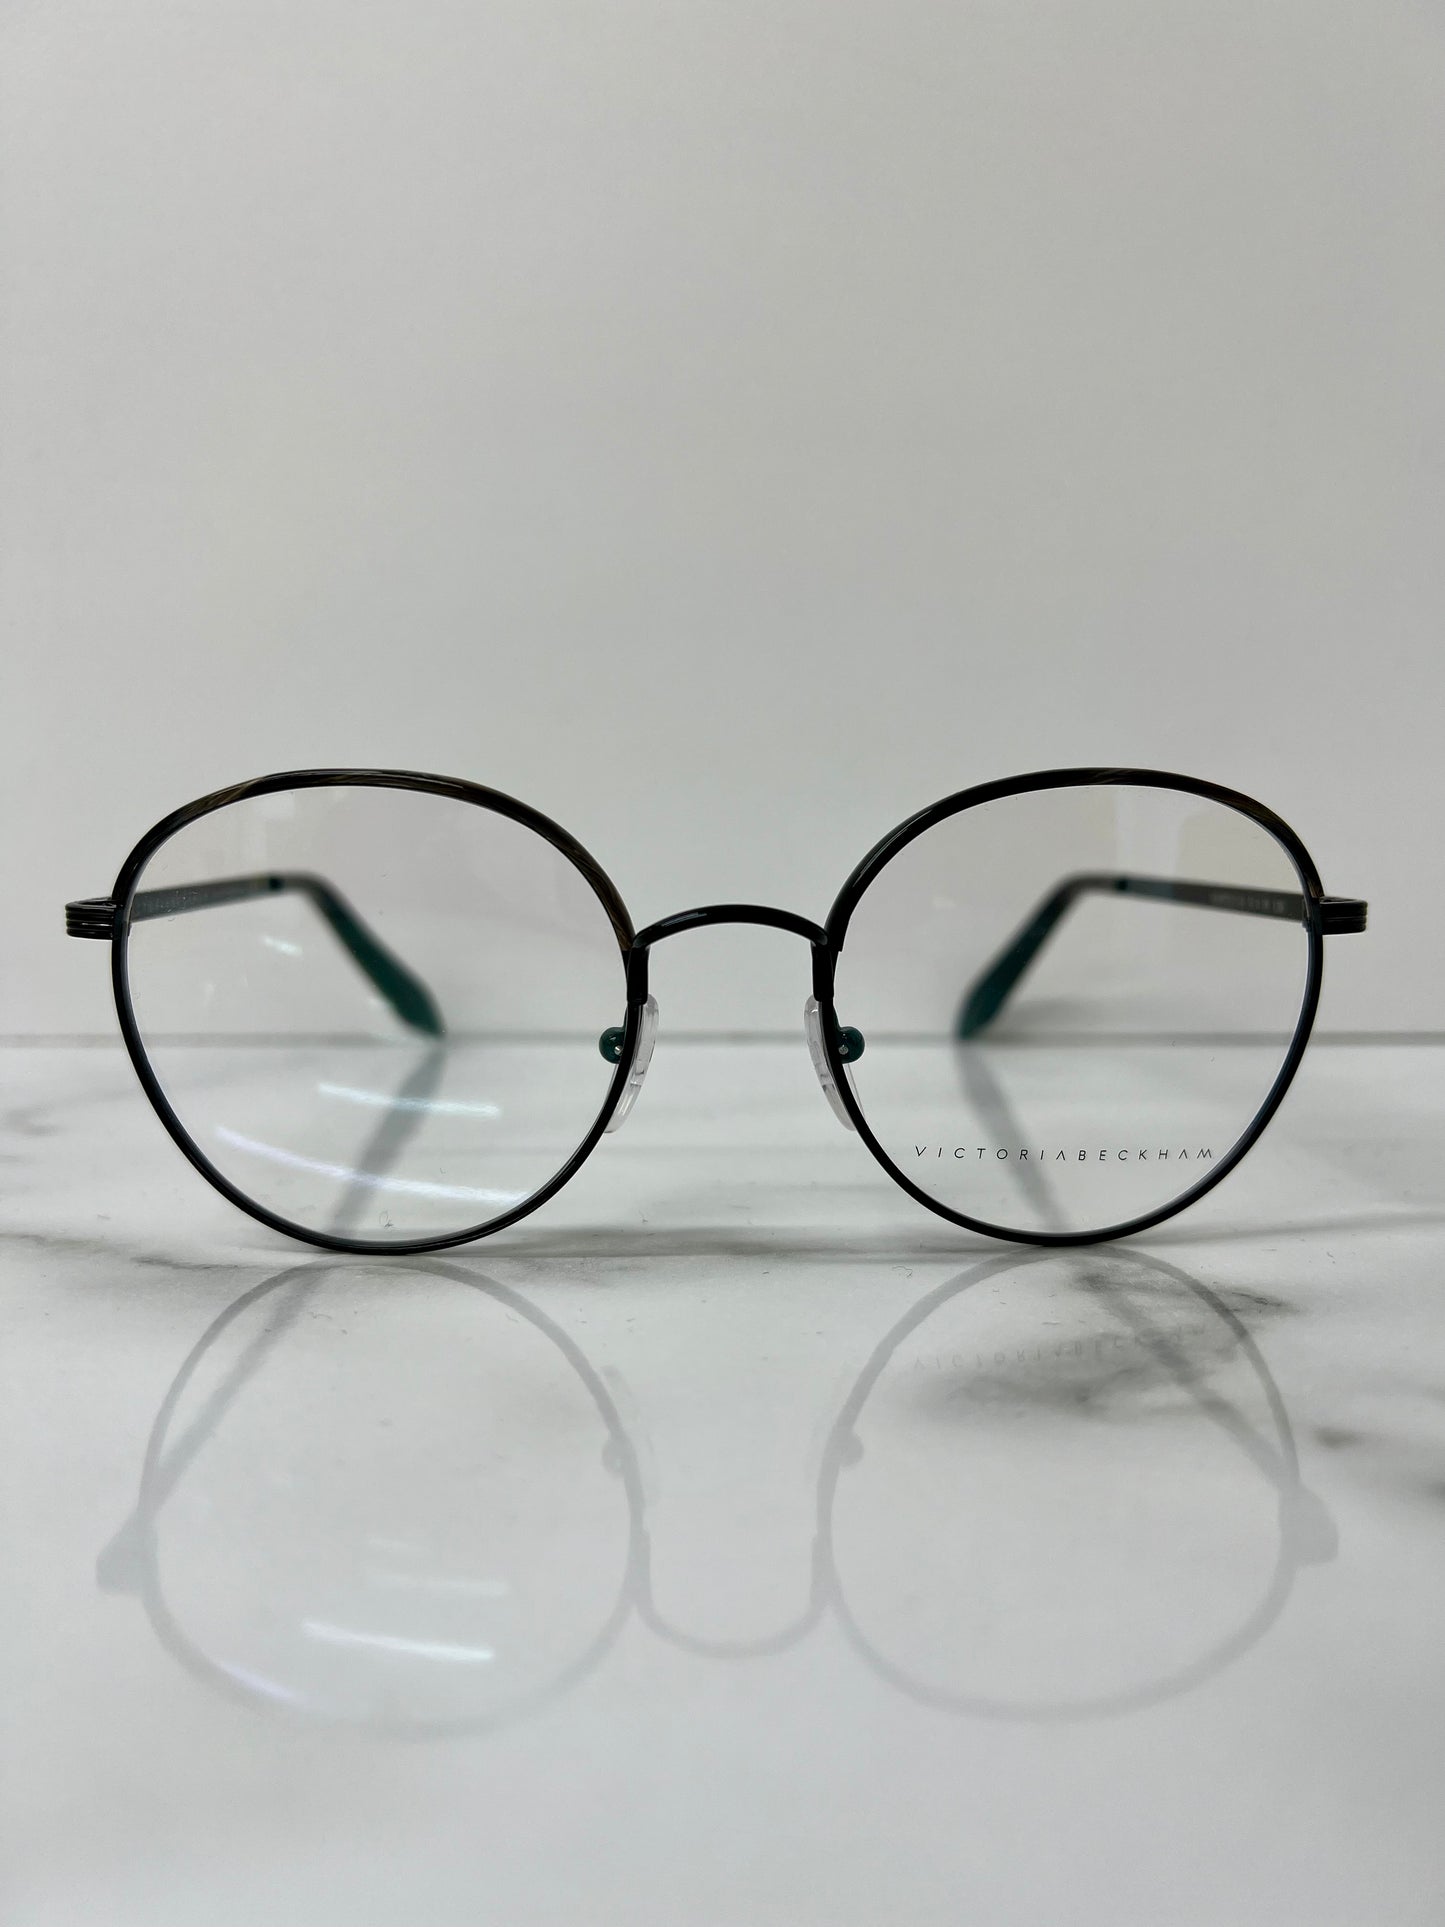 Victoria Beckham Optical Glasses Frames Women Round Black Eyeglasses VBOPT221